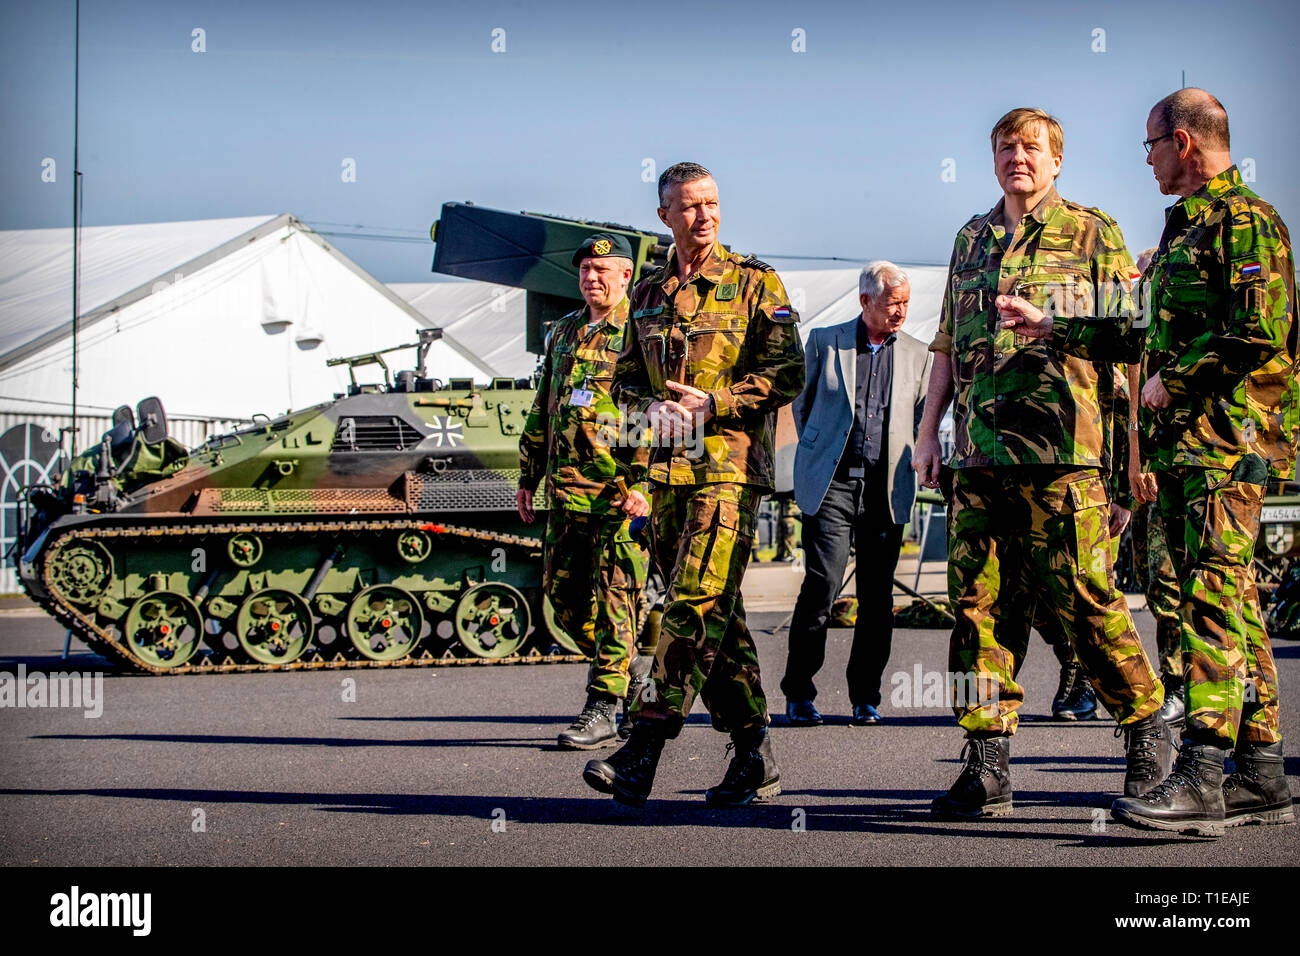 VREDEPEEL - King Willem Alexander visits military defense base, Vredepeel, the Netherlands - 22 Mar 2019 copyruht robin utrecht Stock Photo